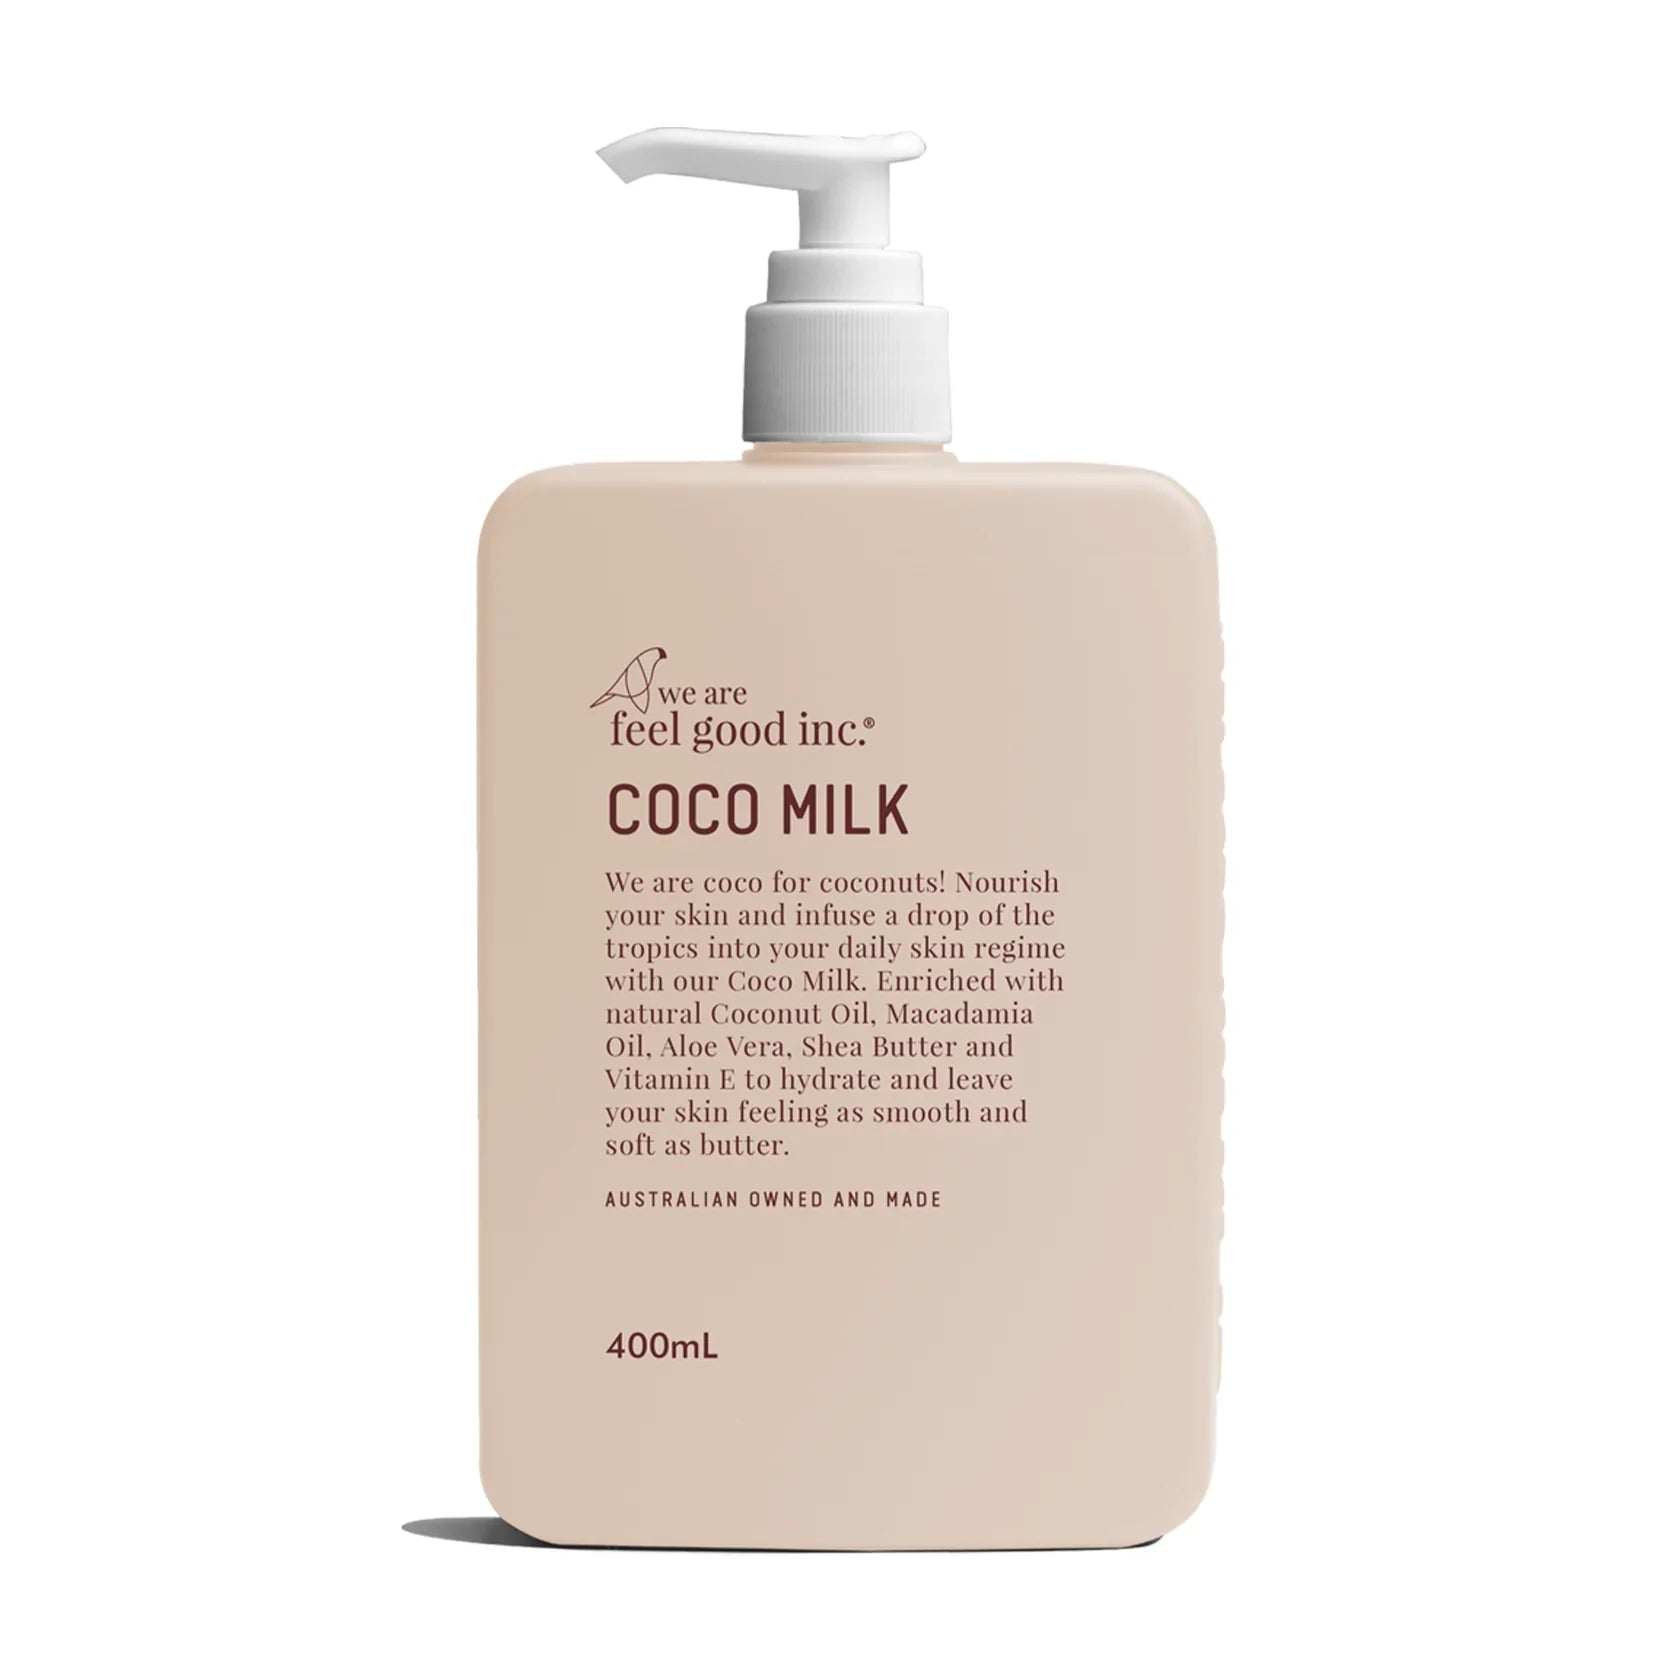 We Are Feel Good Inc Coco Body Milk Body Moisturiser 400ml pump bottle